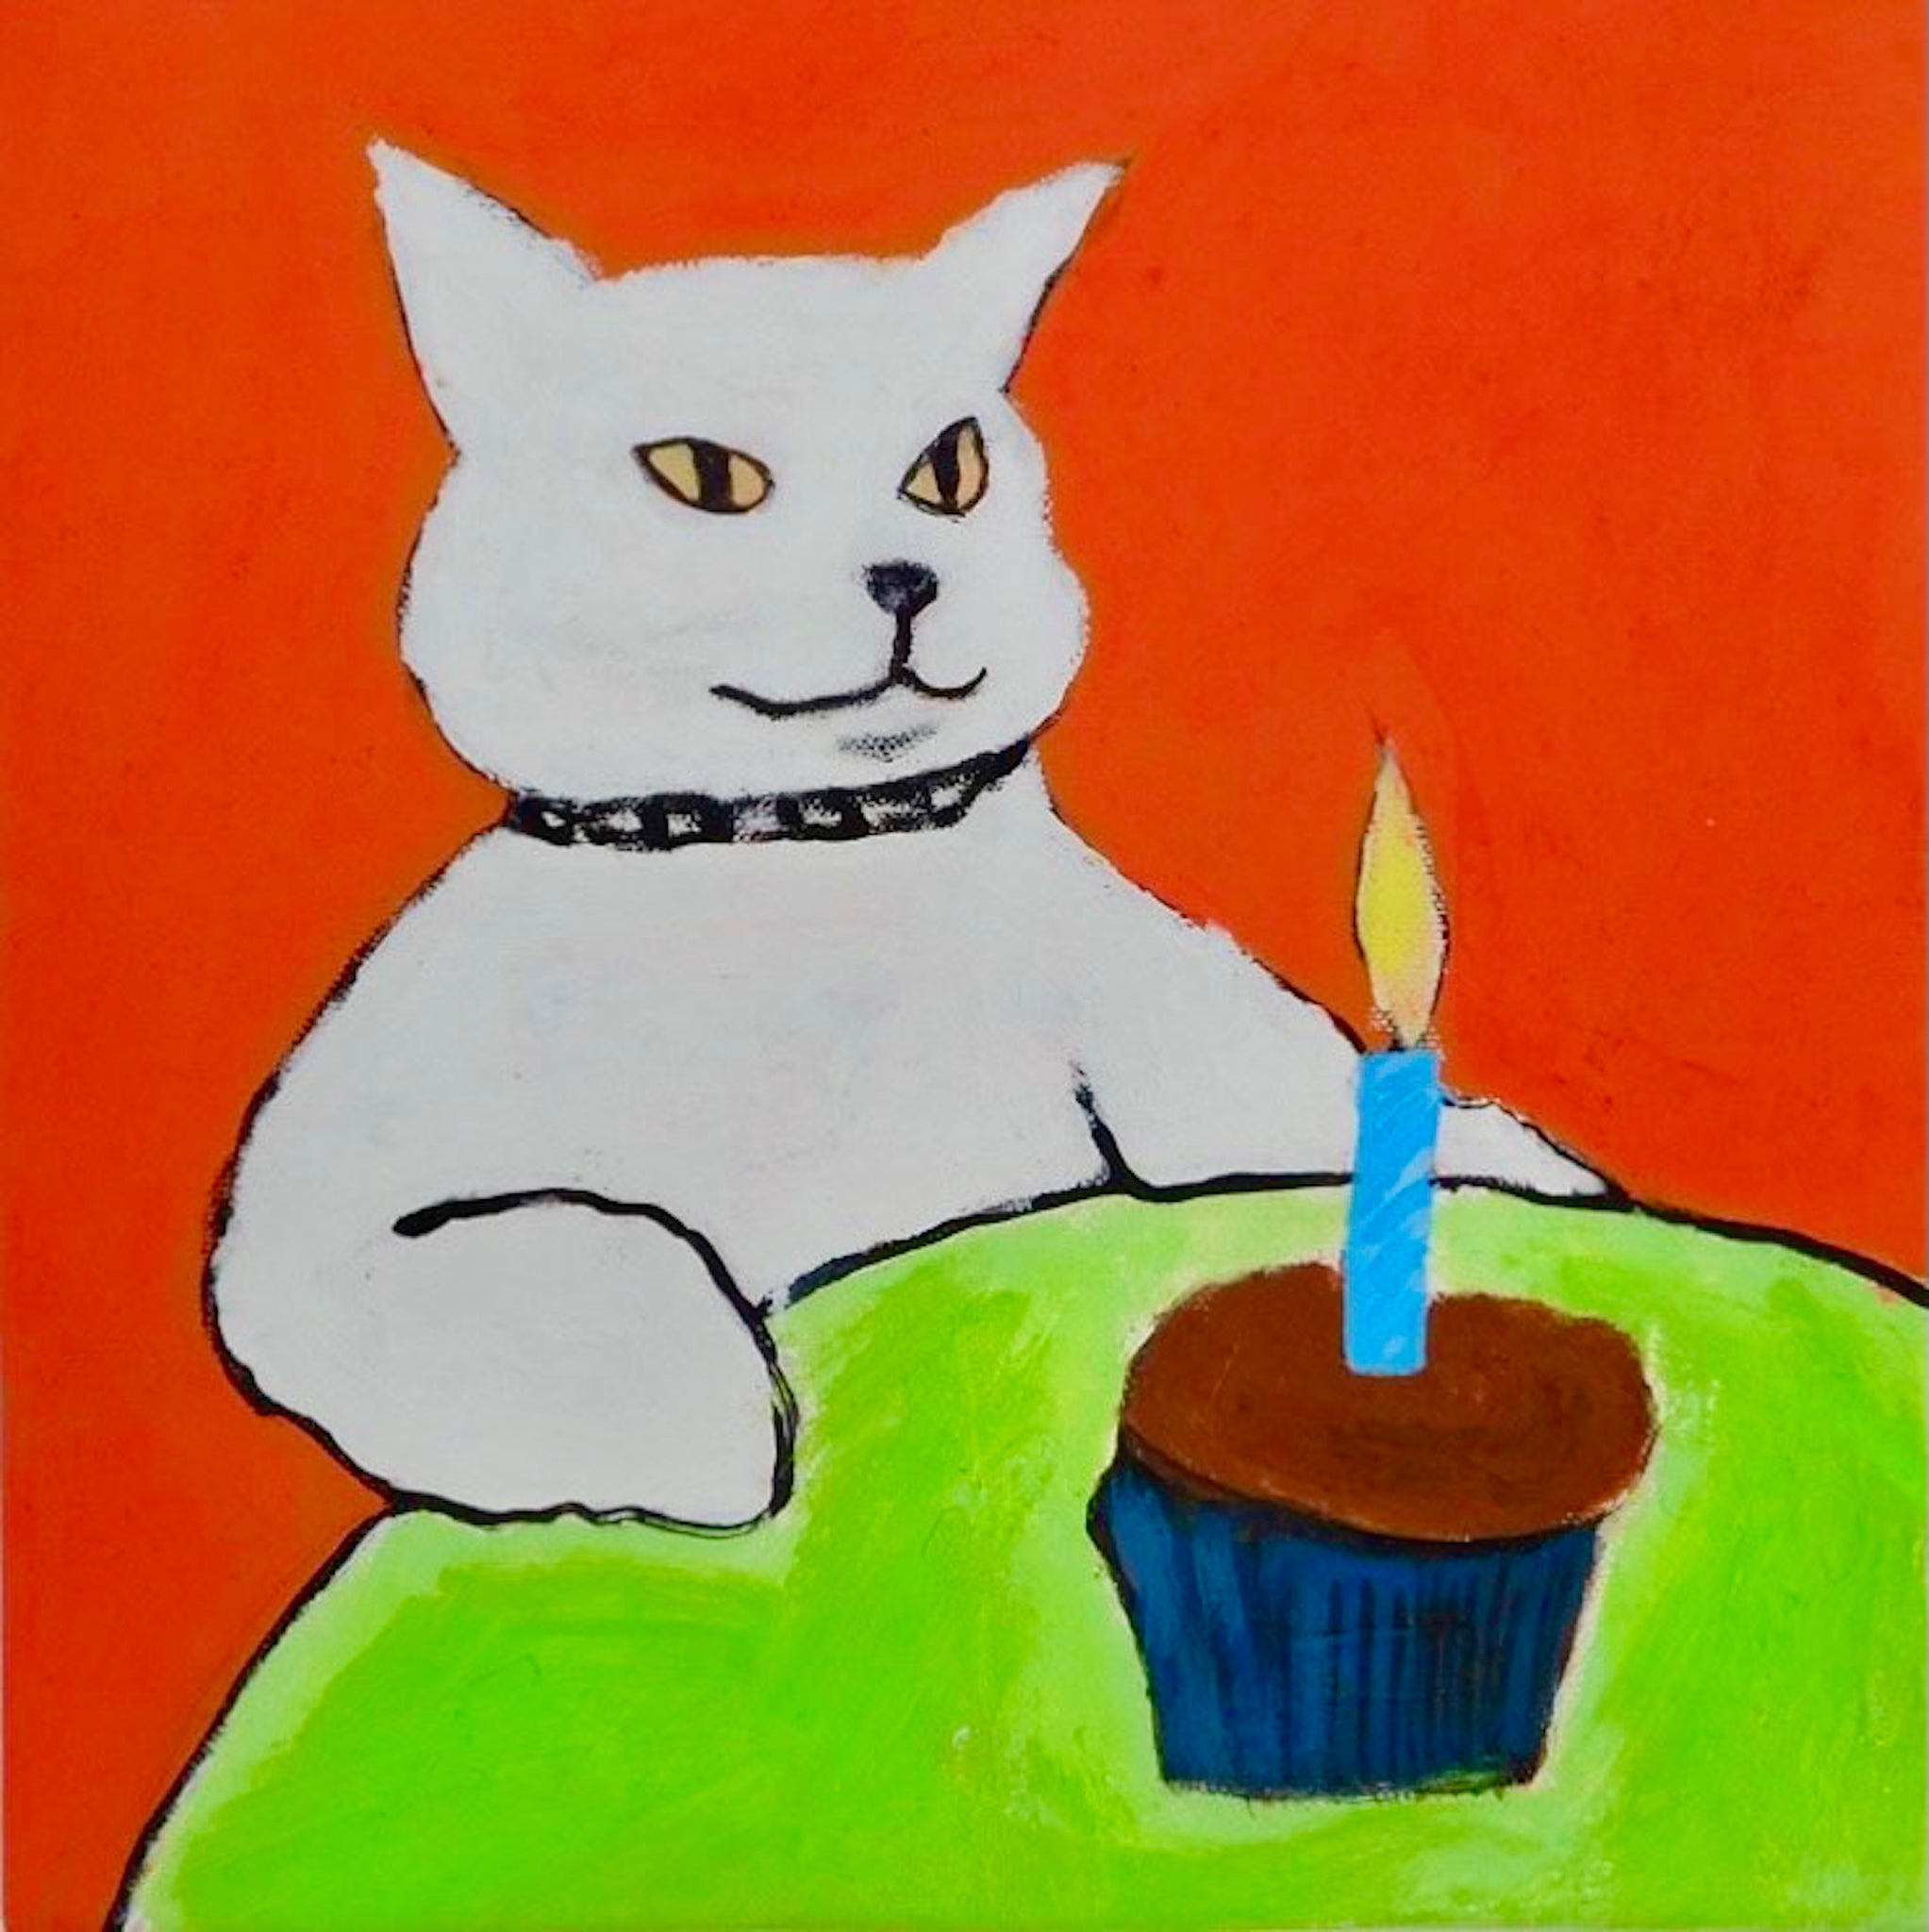 Brian Leo, "Birthday For One"